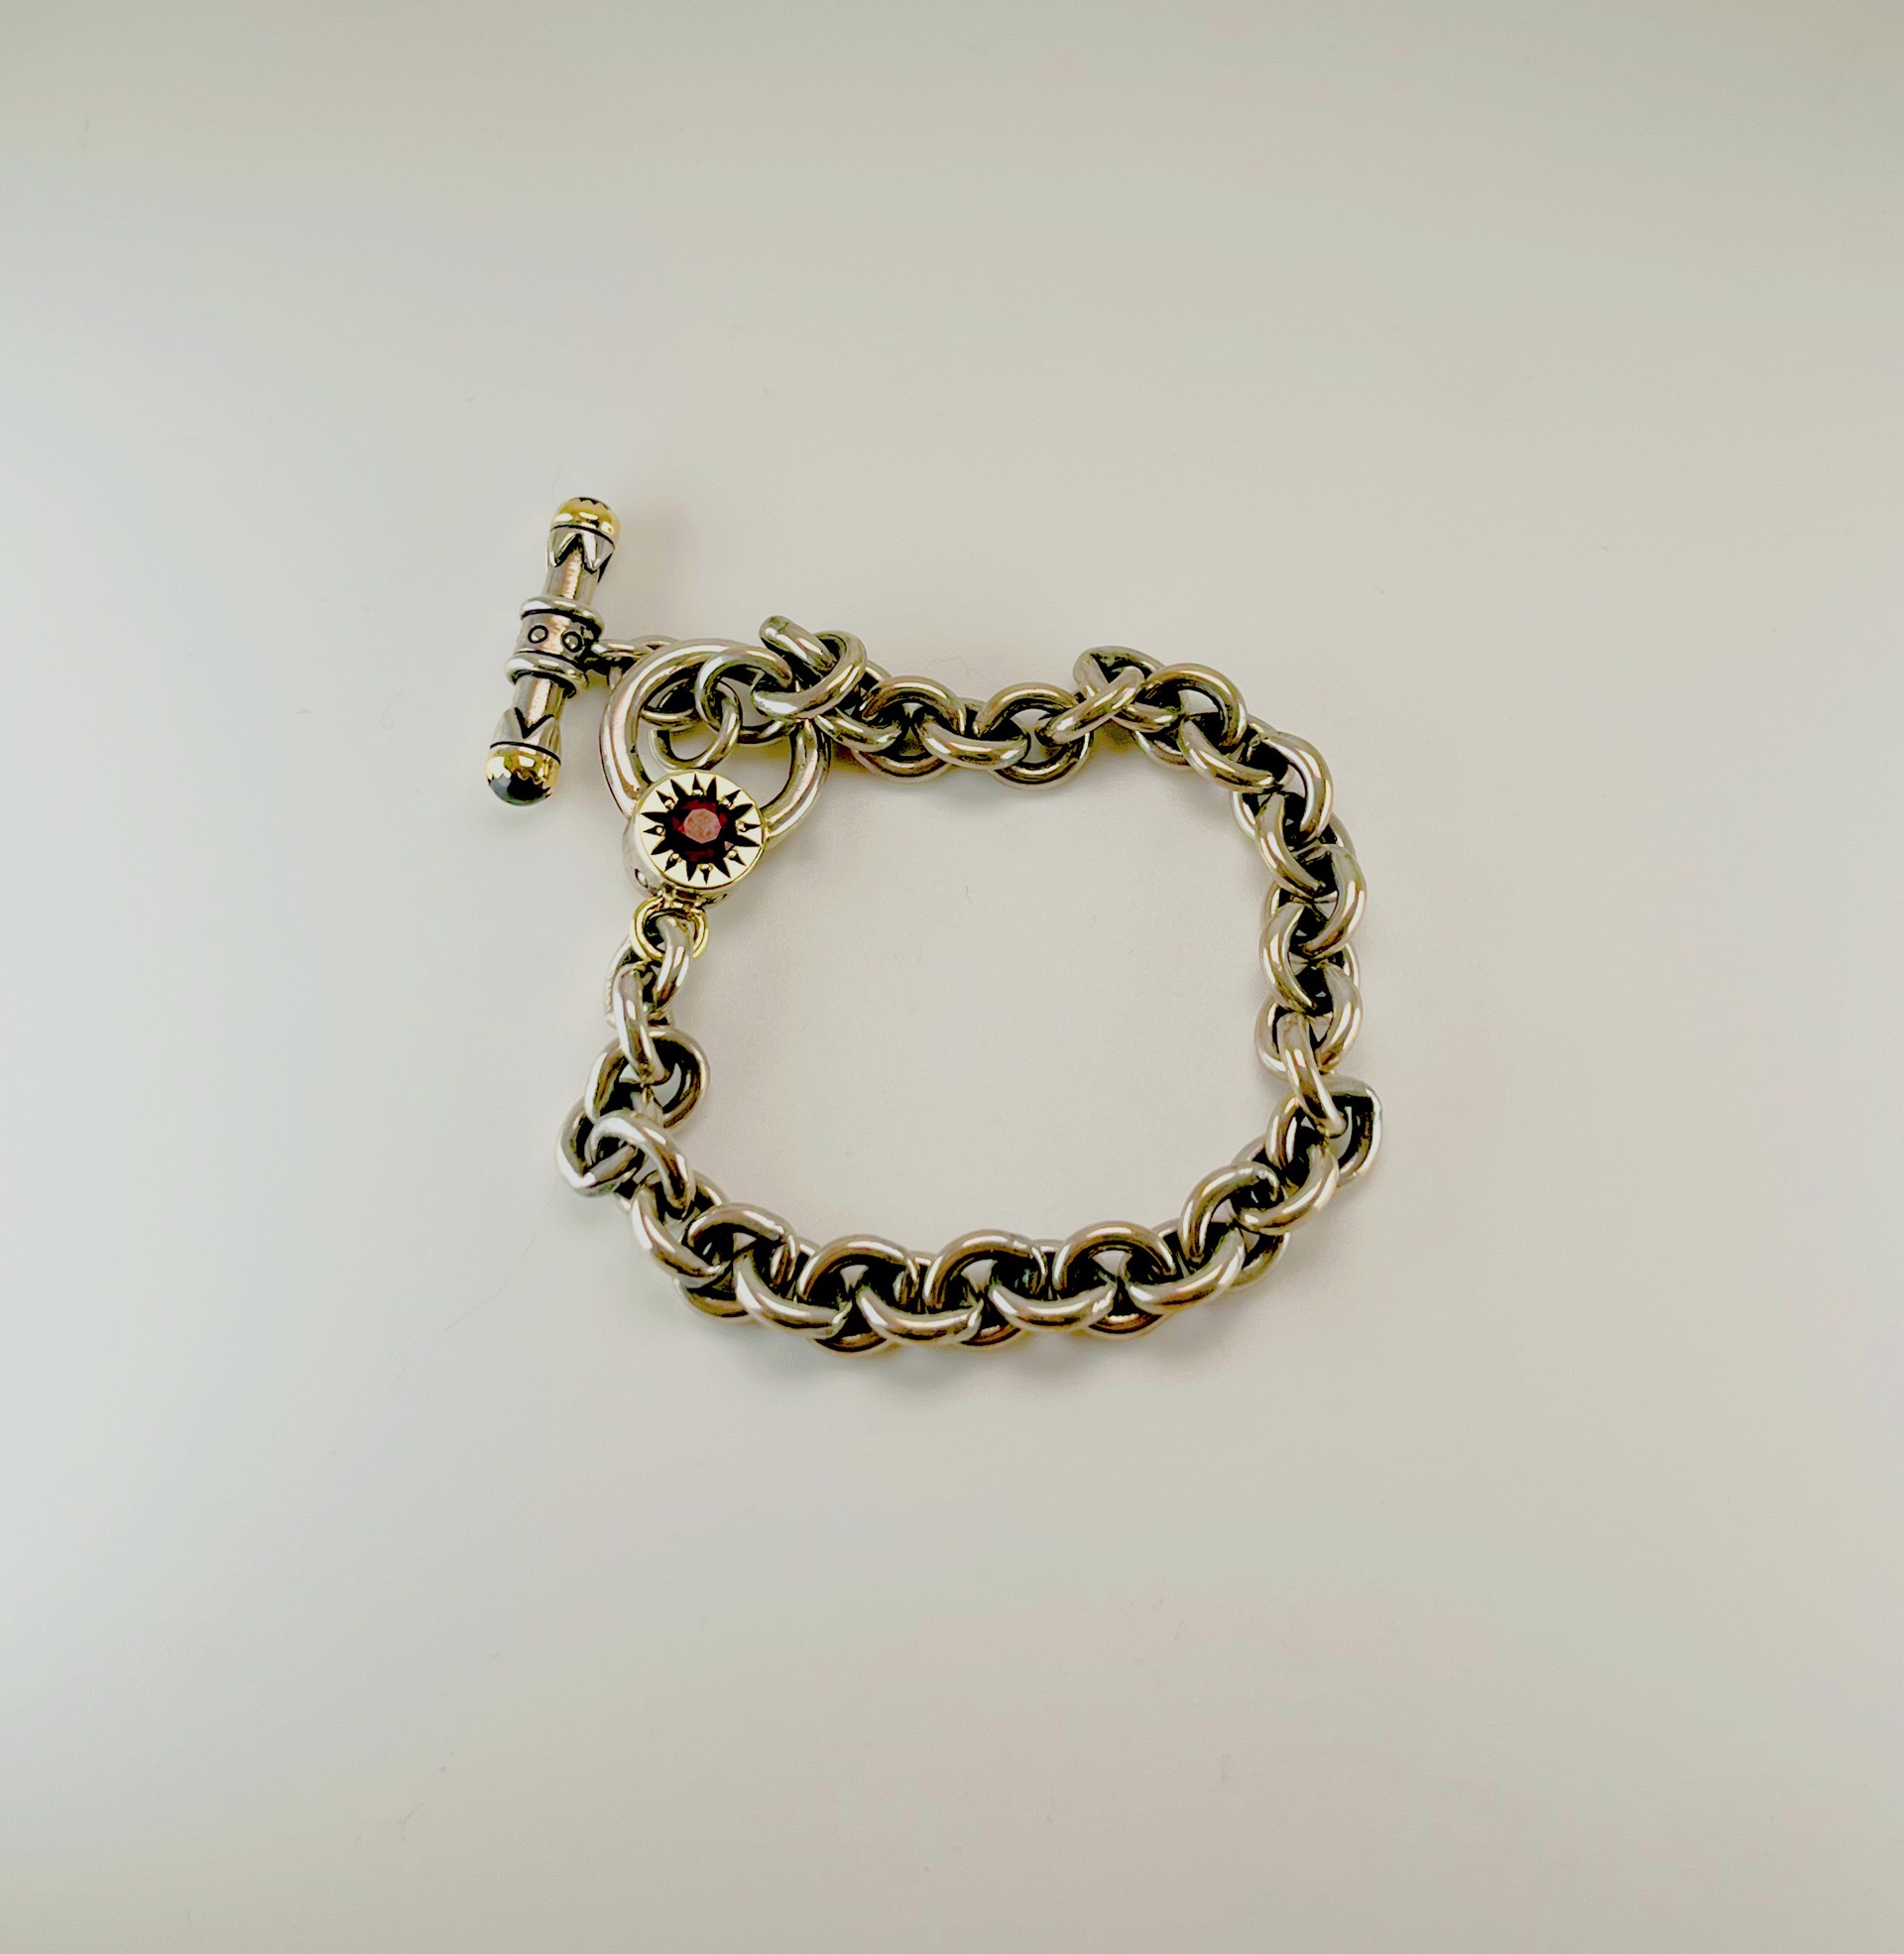 Garnet bracelet by DAVID & RONNIE